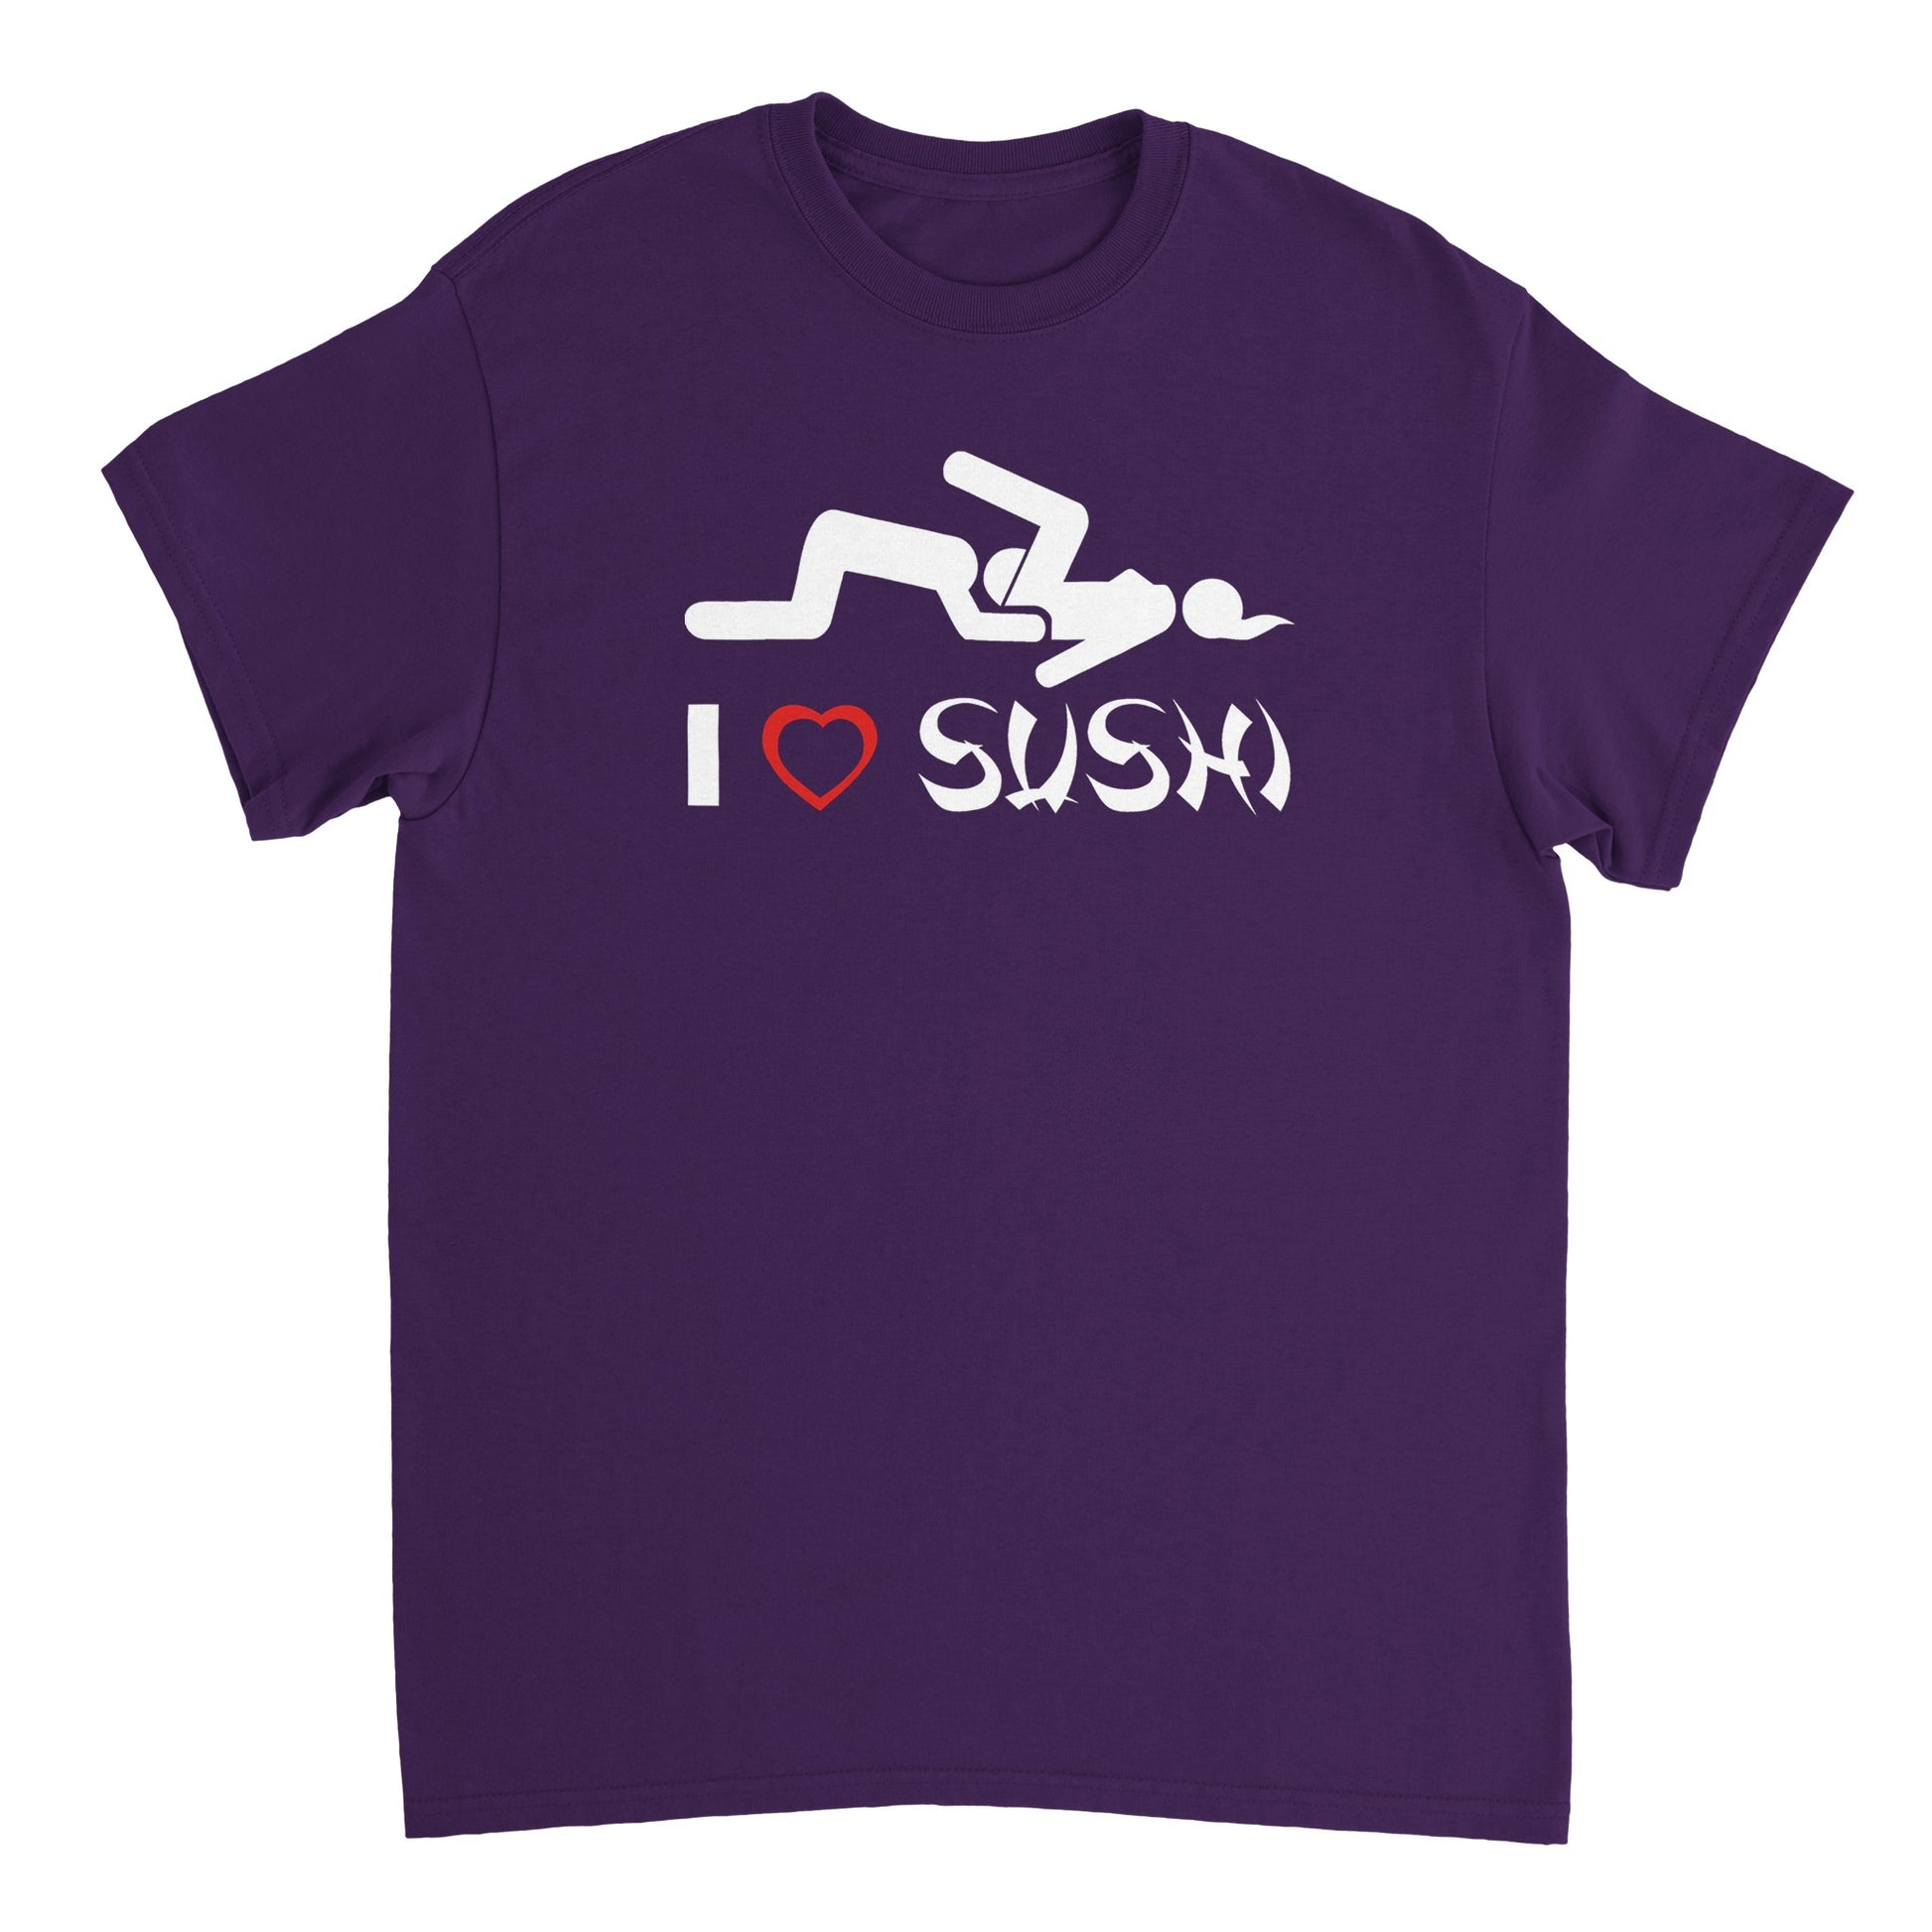 I Love Sushi T-shirt - Mister Snarky's